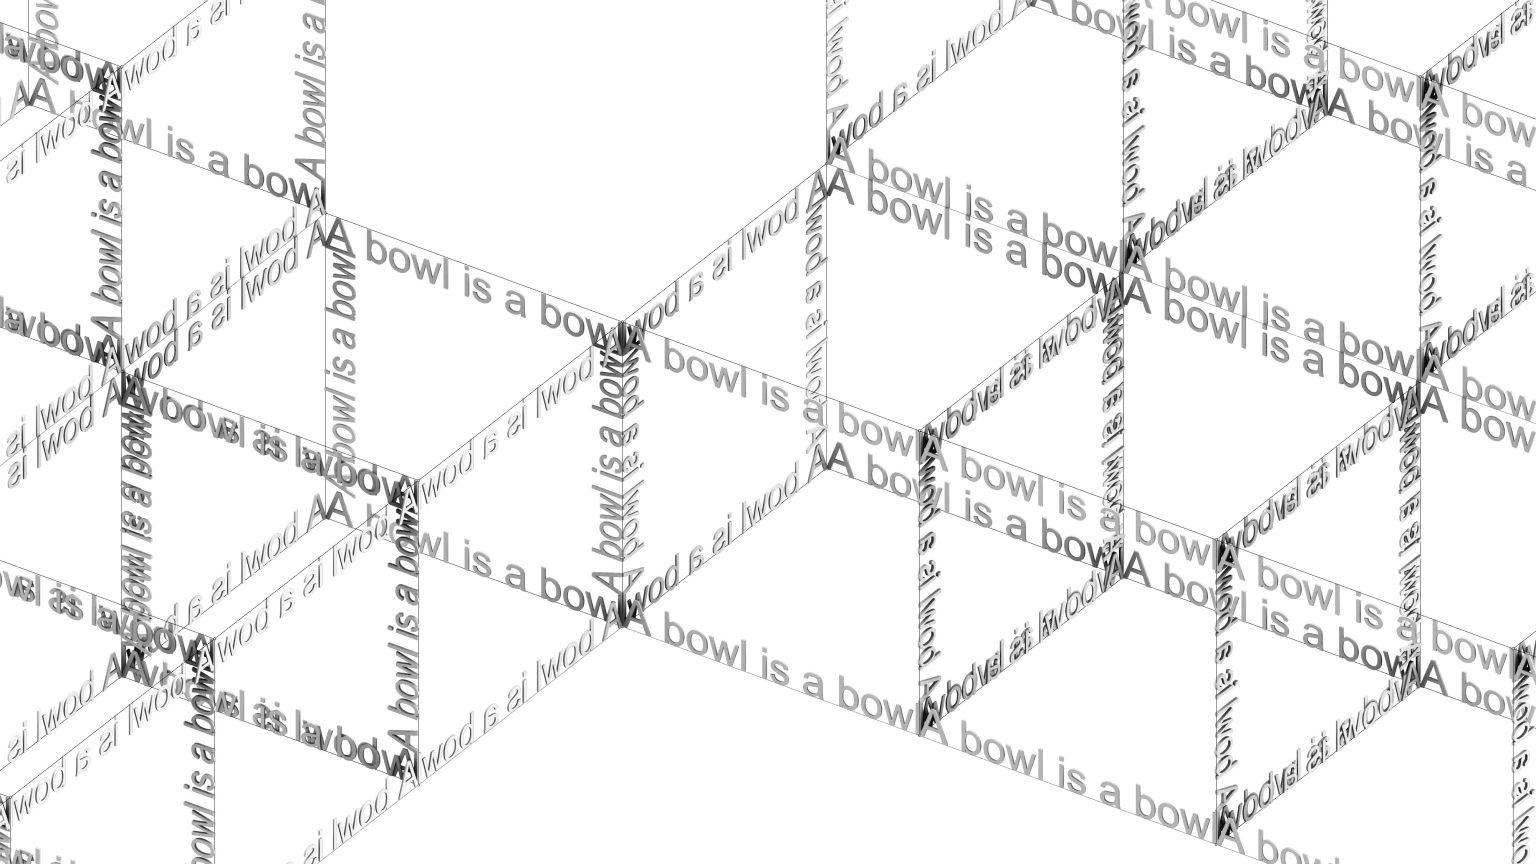 A-bowl-is-a-bowl-images-05